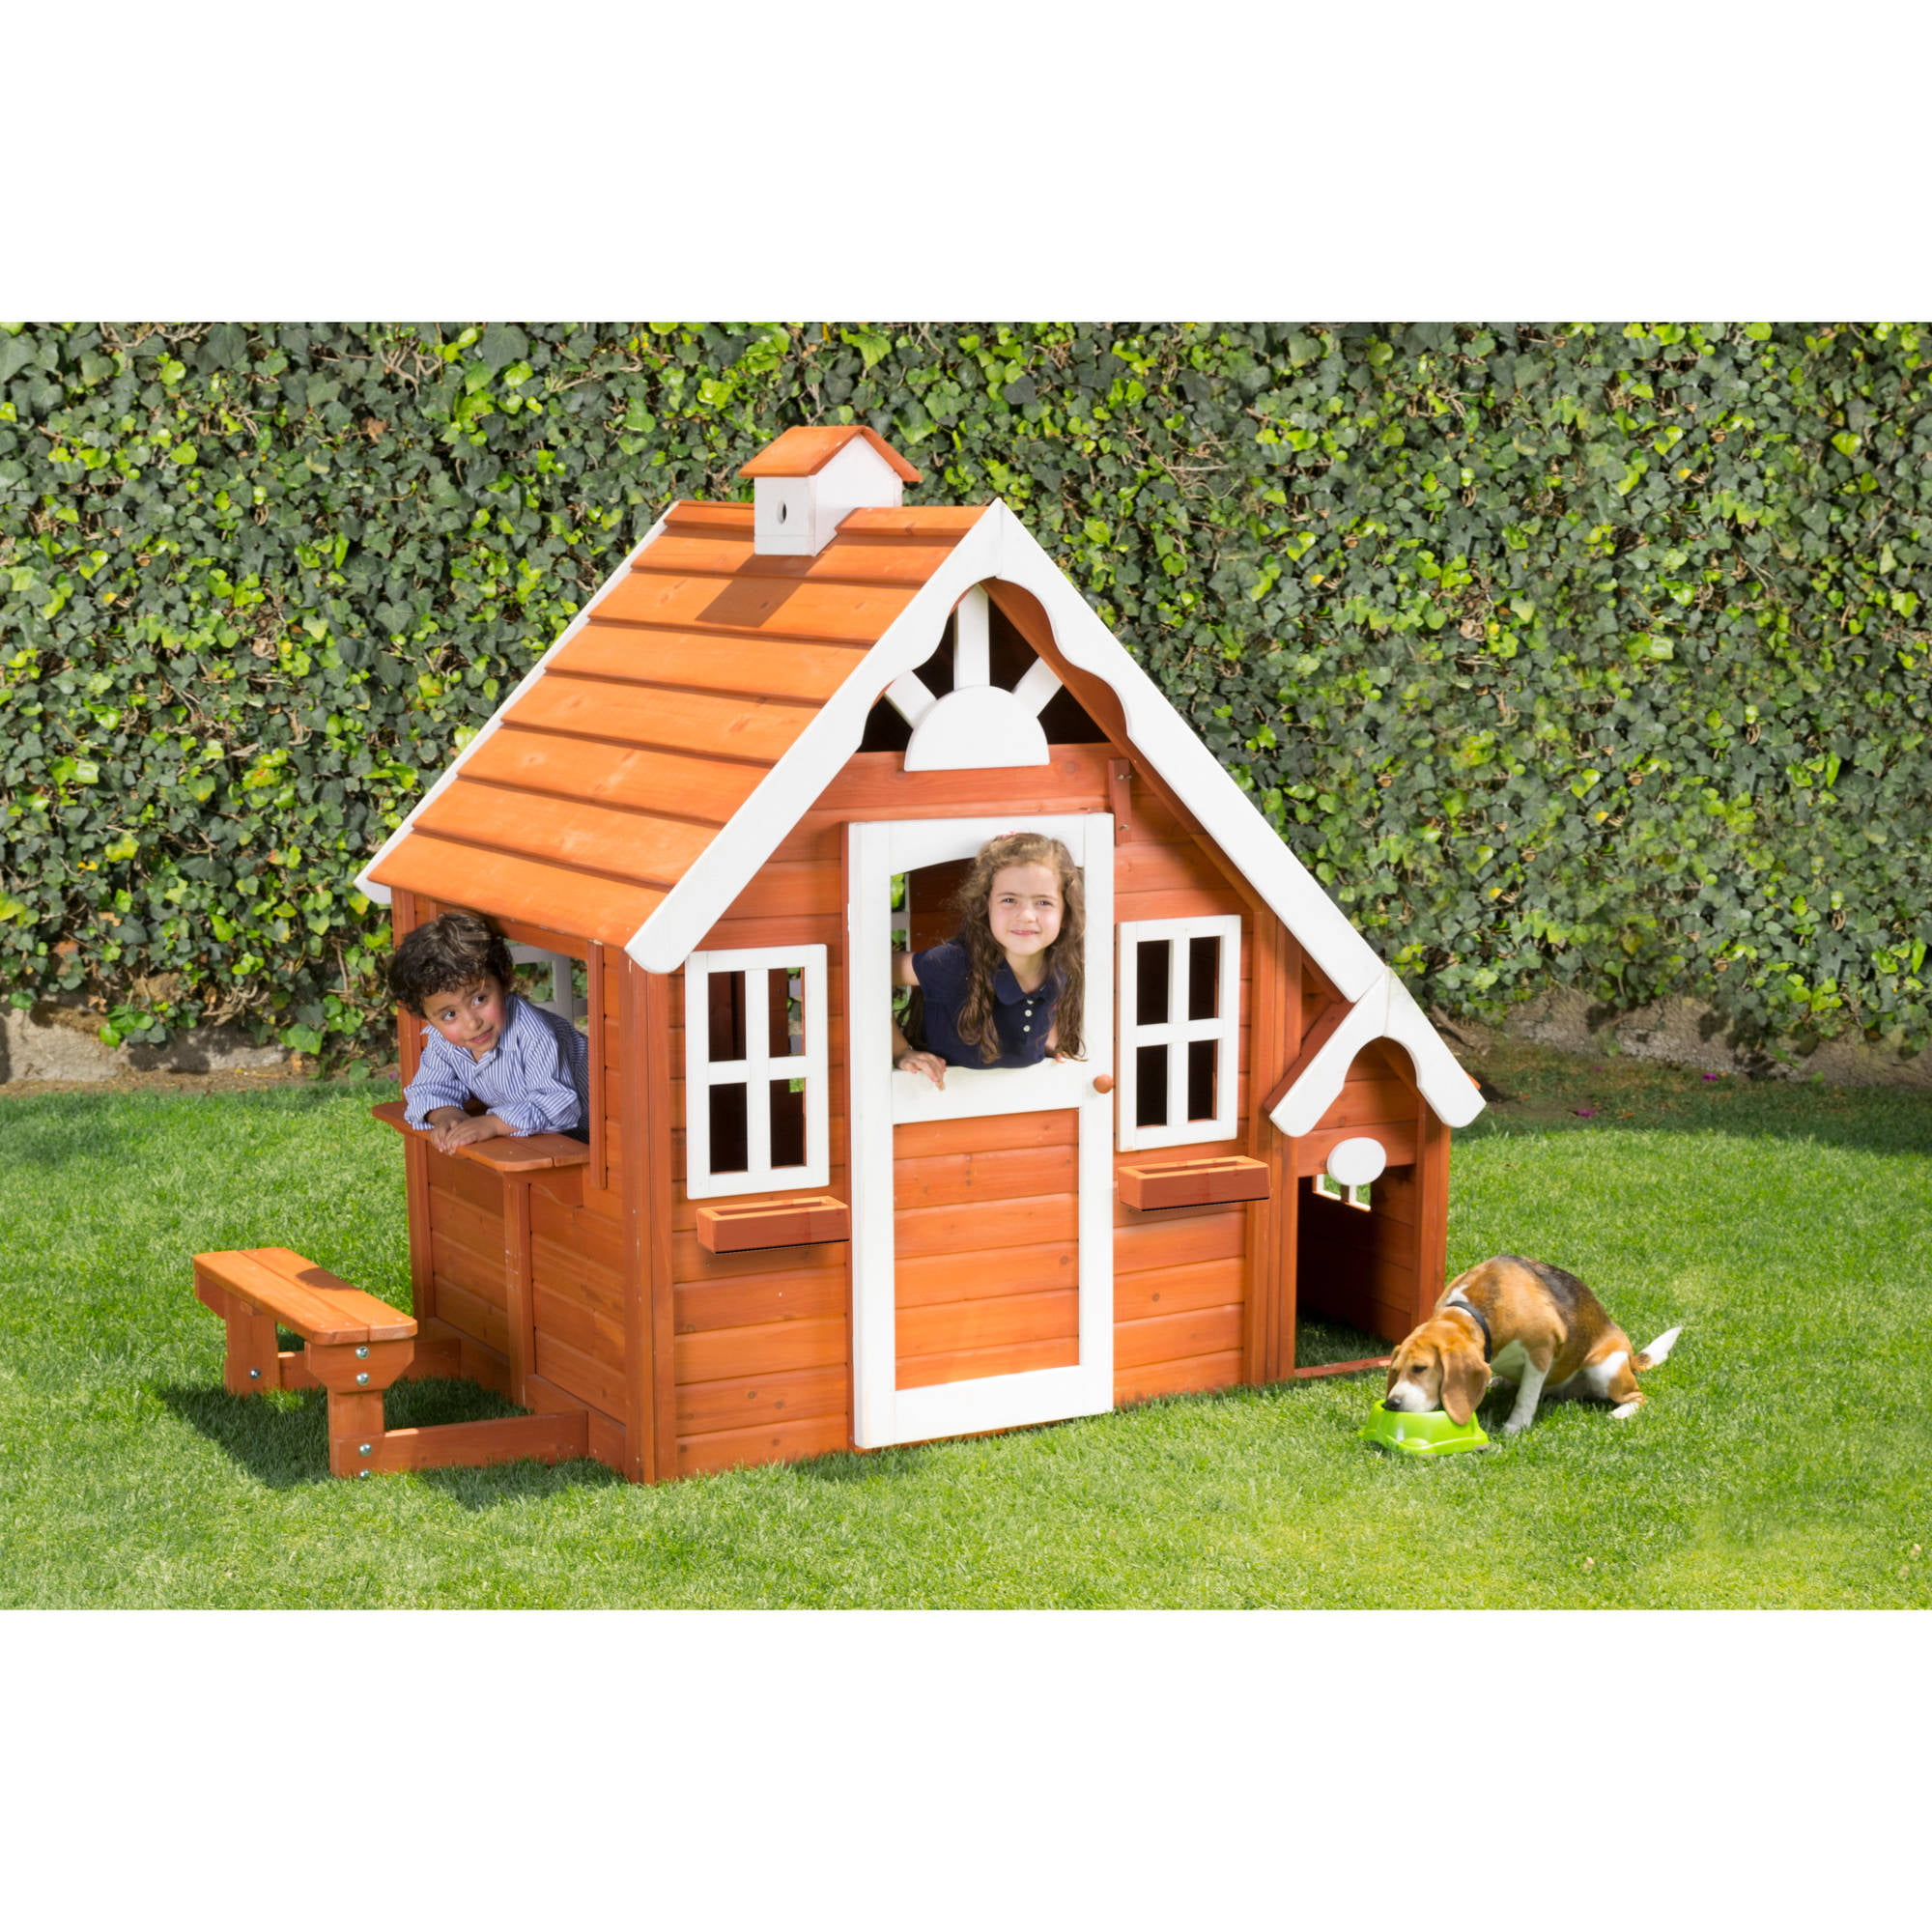 dog playhouse